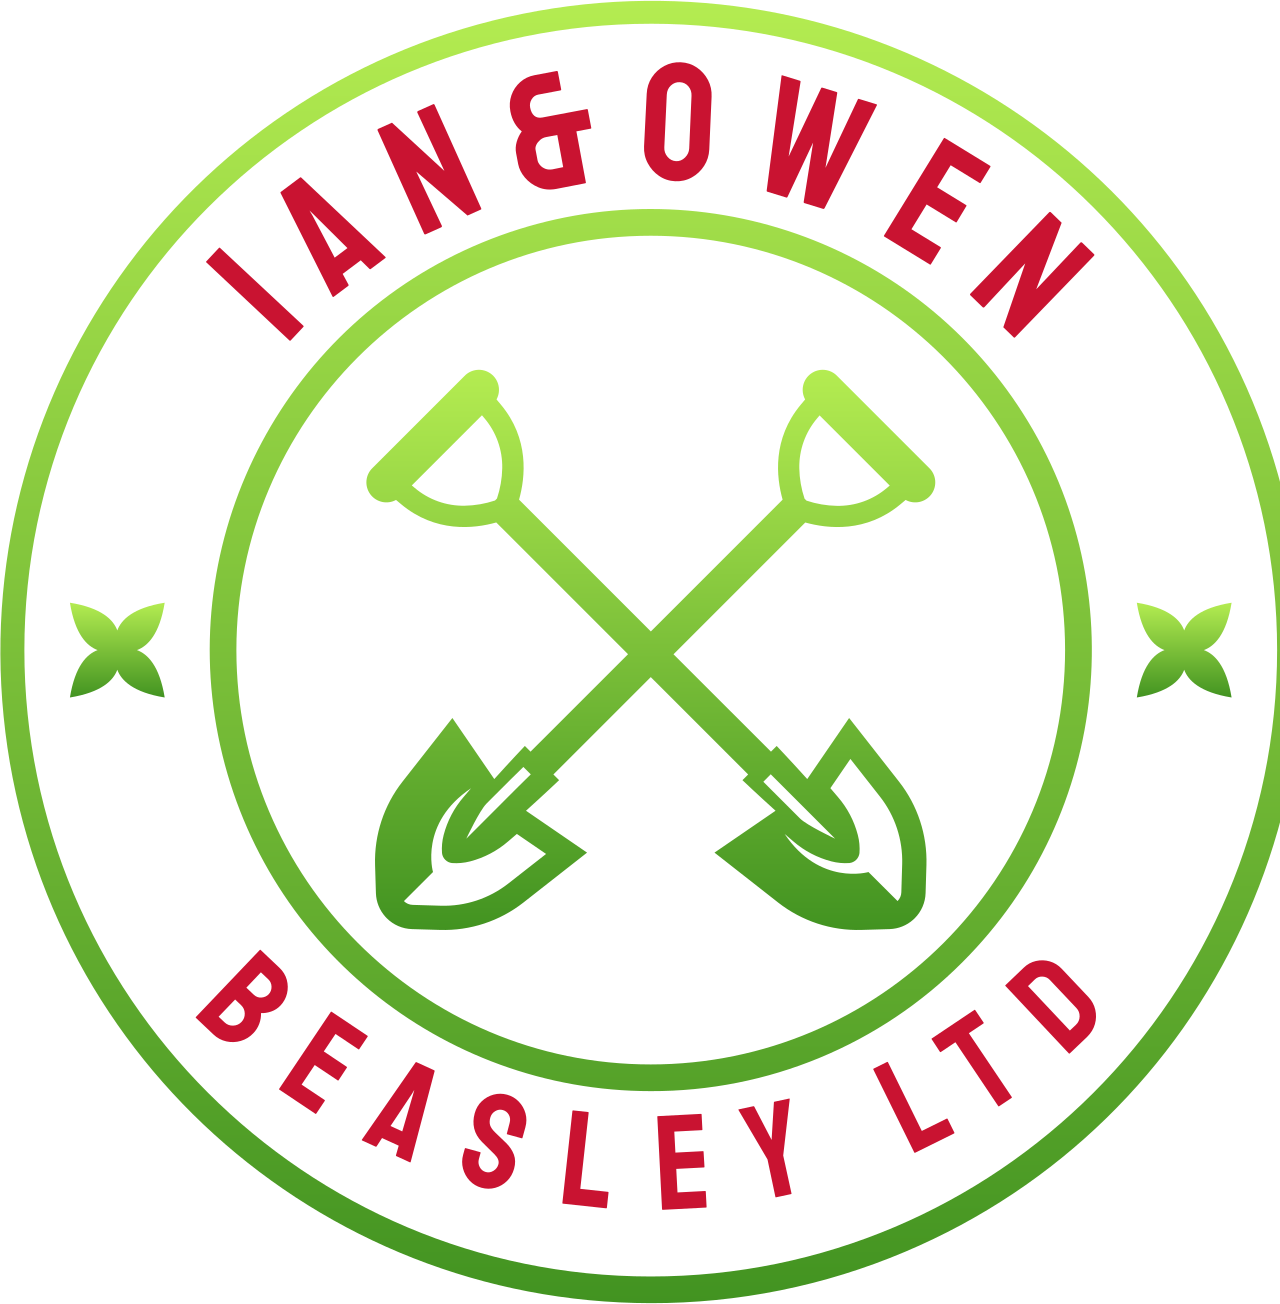 ian&owen's logo